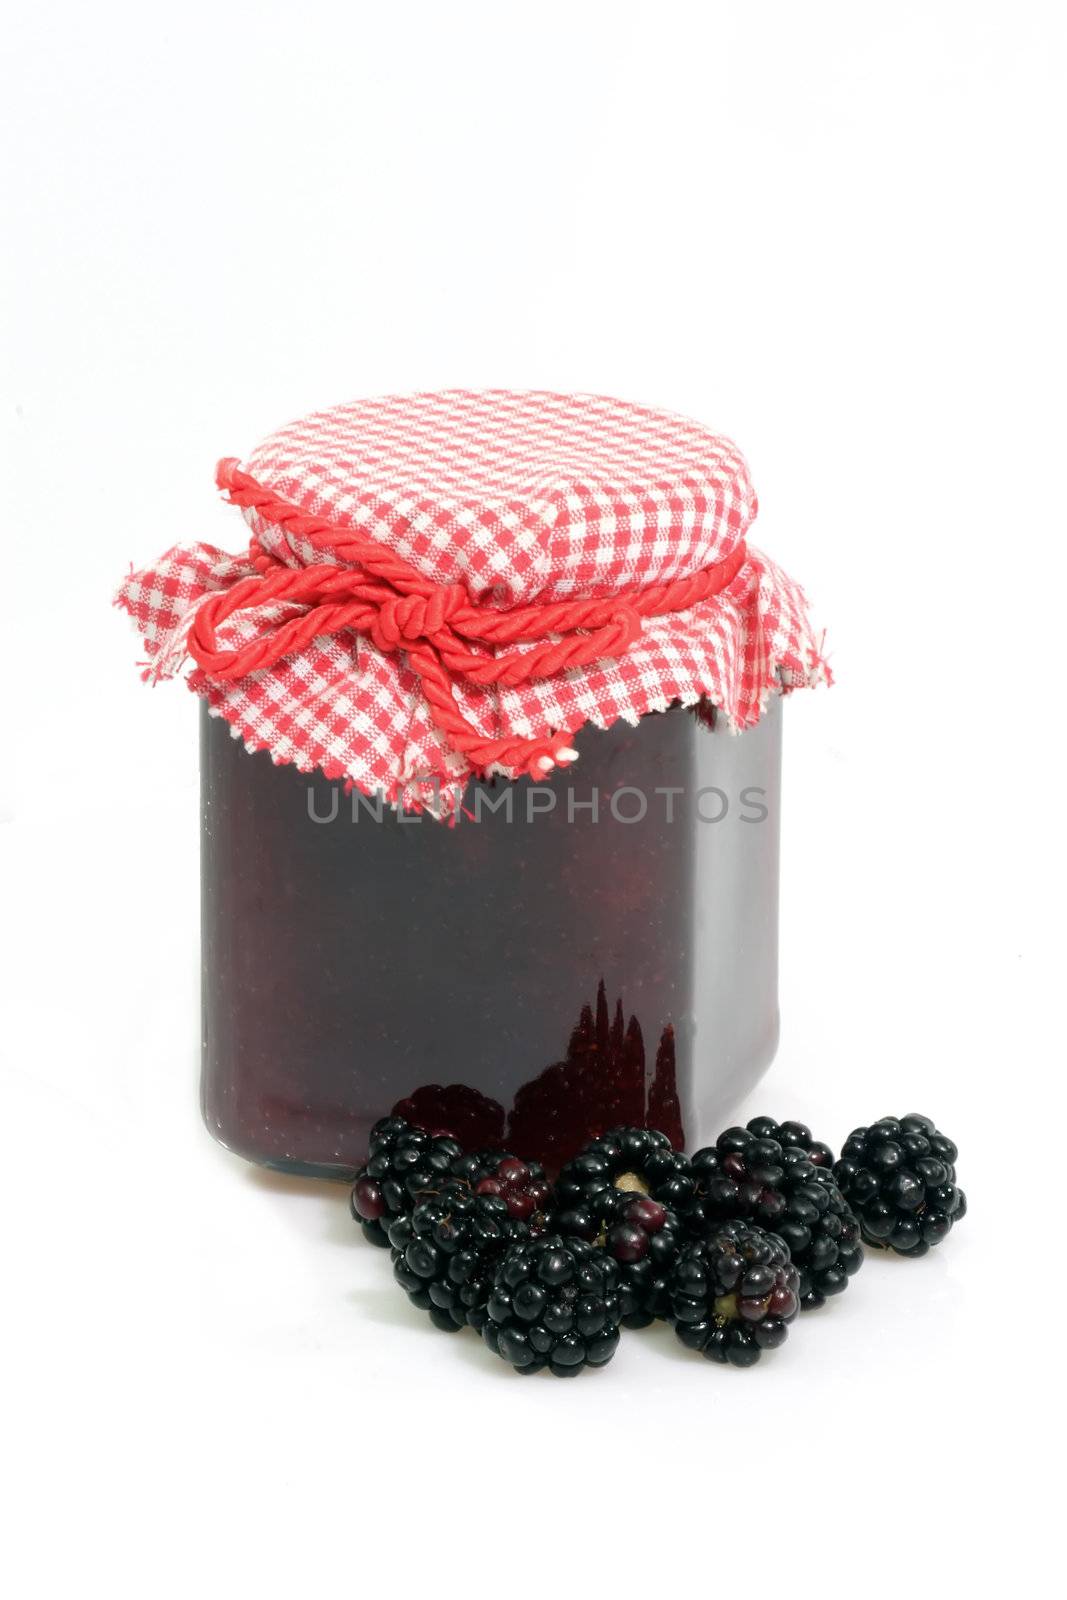 Blackberry jam in glass and nature blackberries